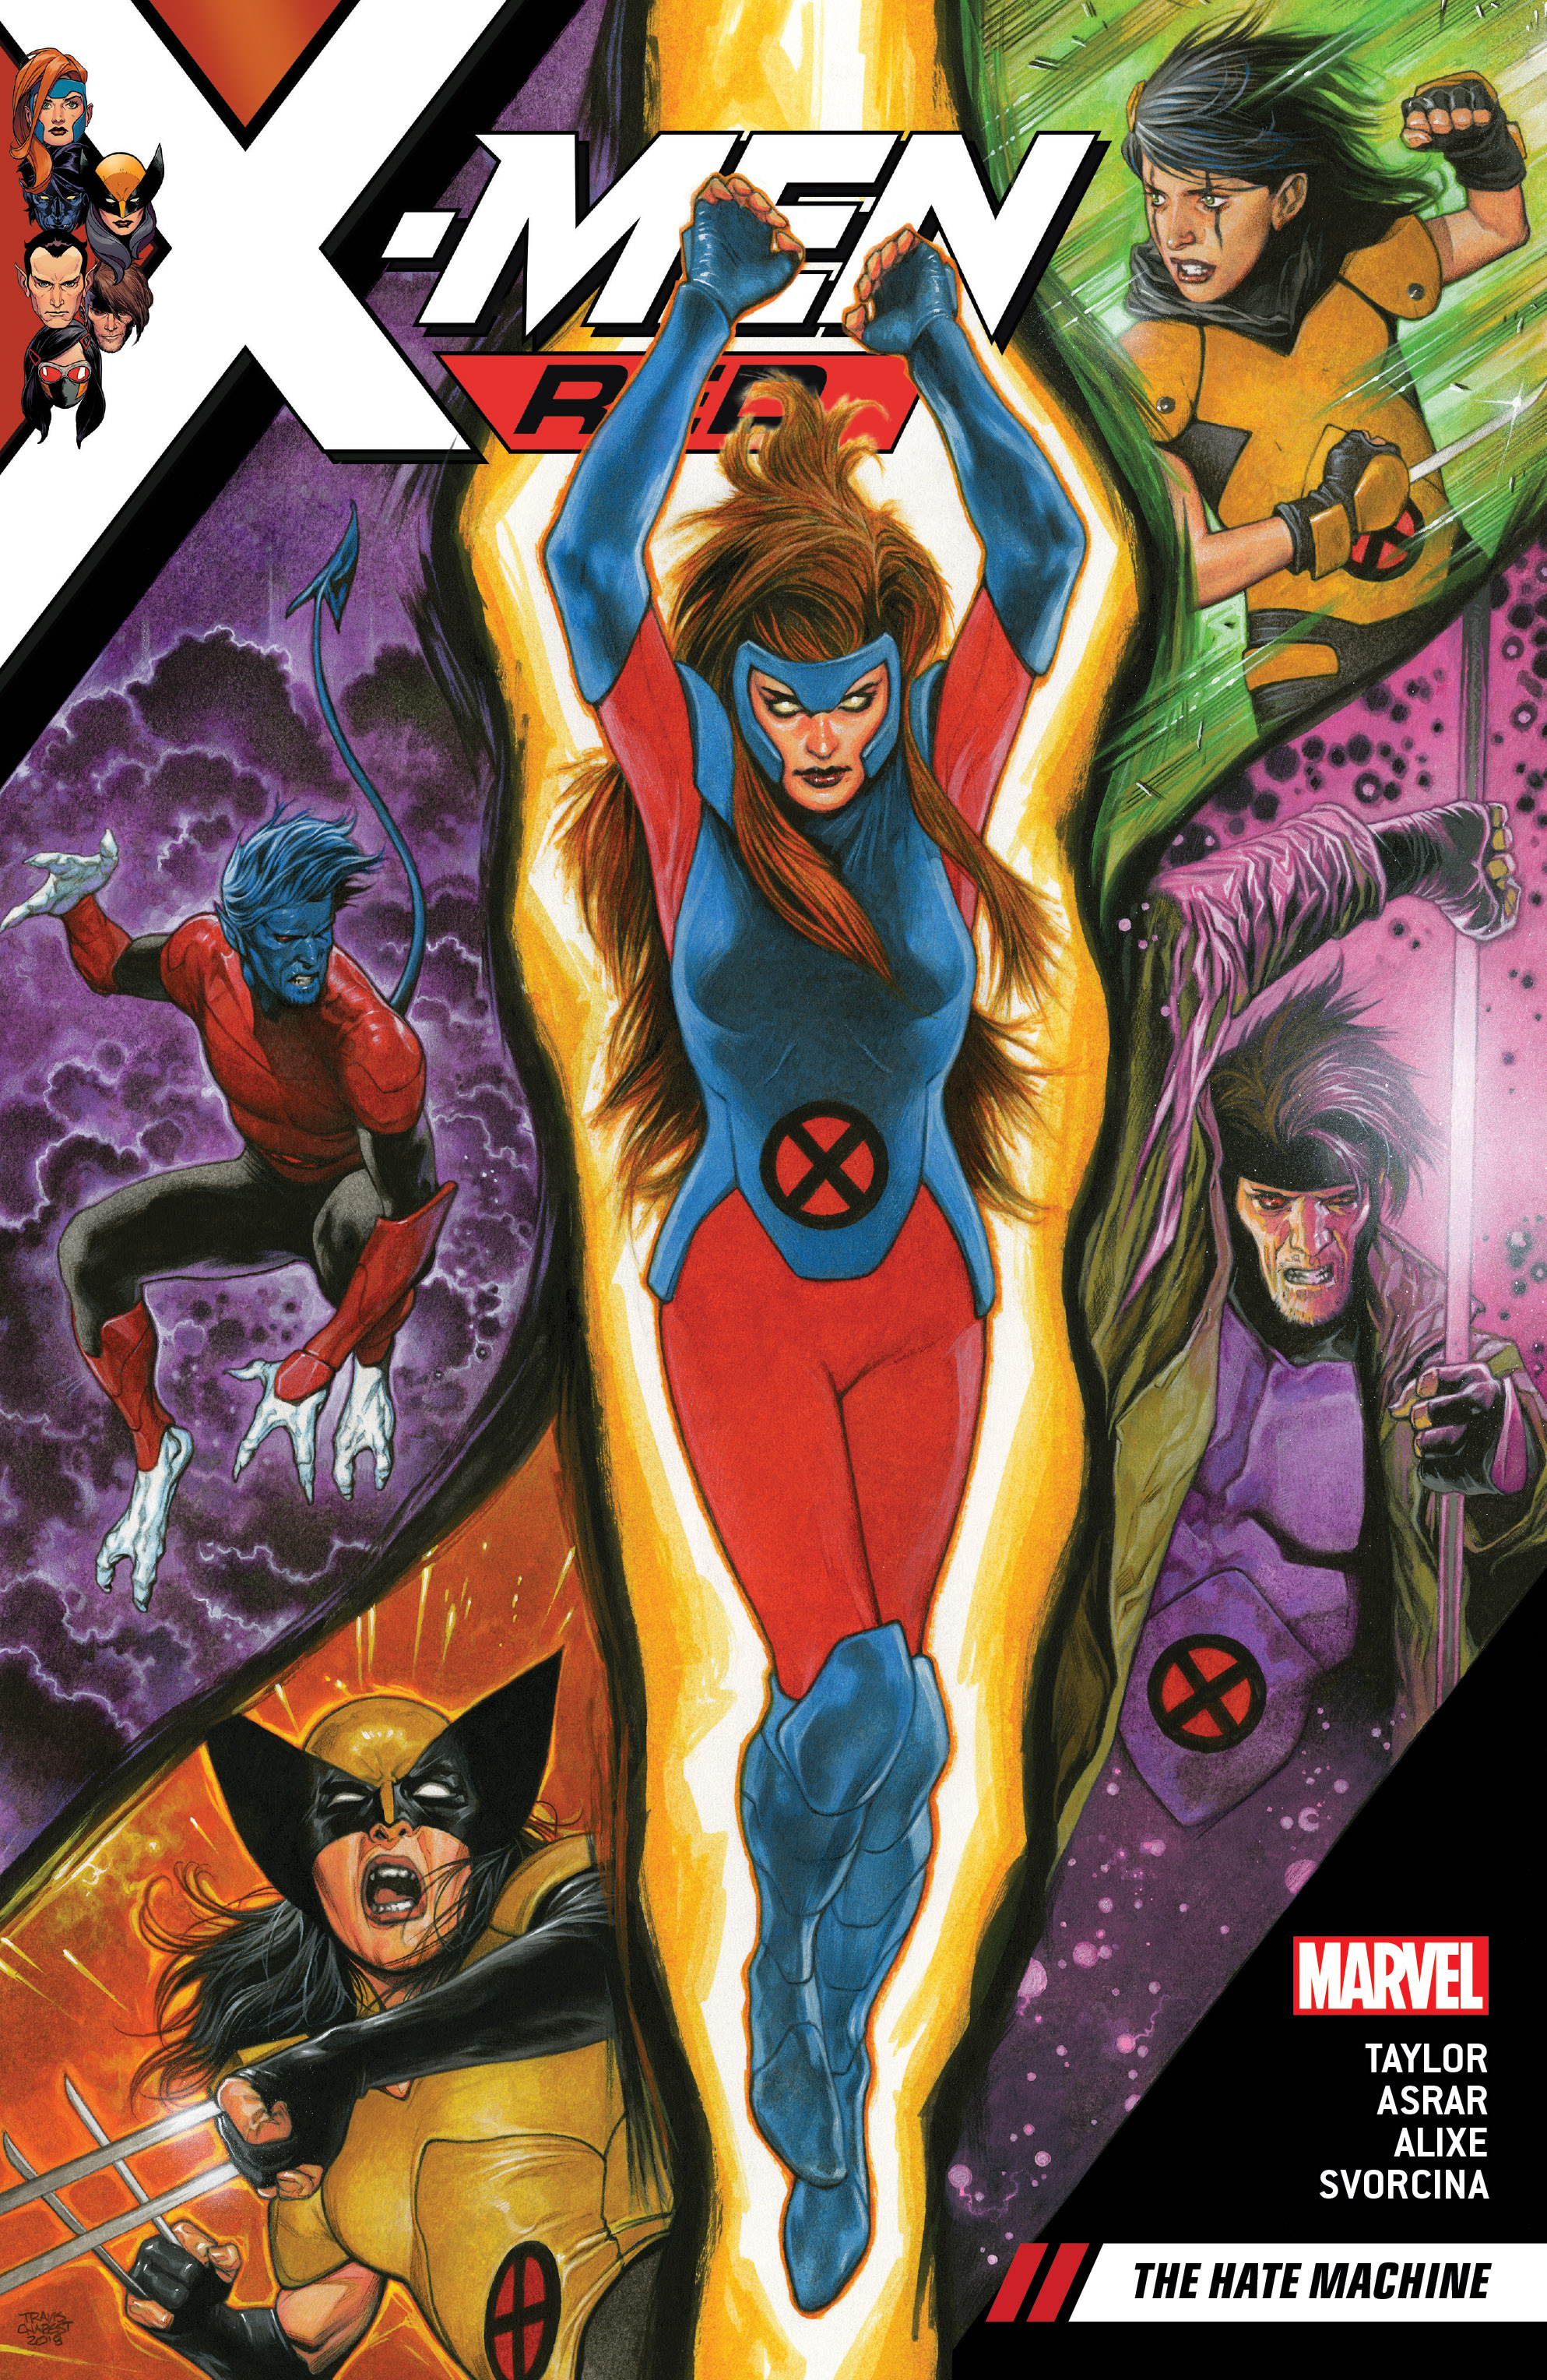 X-Men Red Vol. 1: The Hate Machine (Trade Paperback)